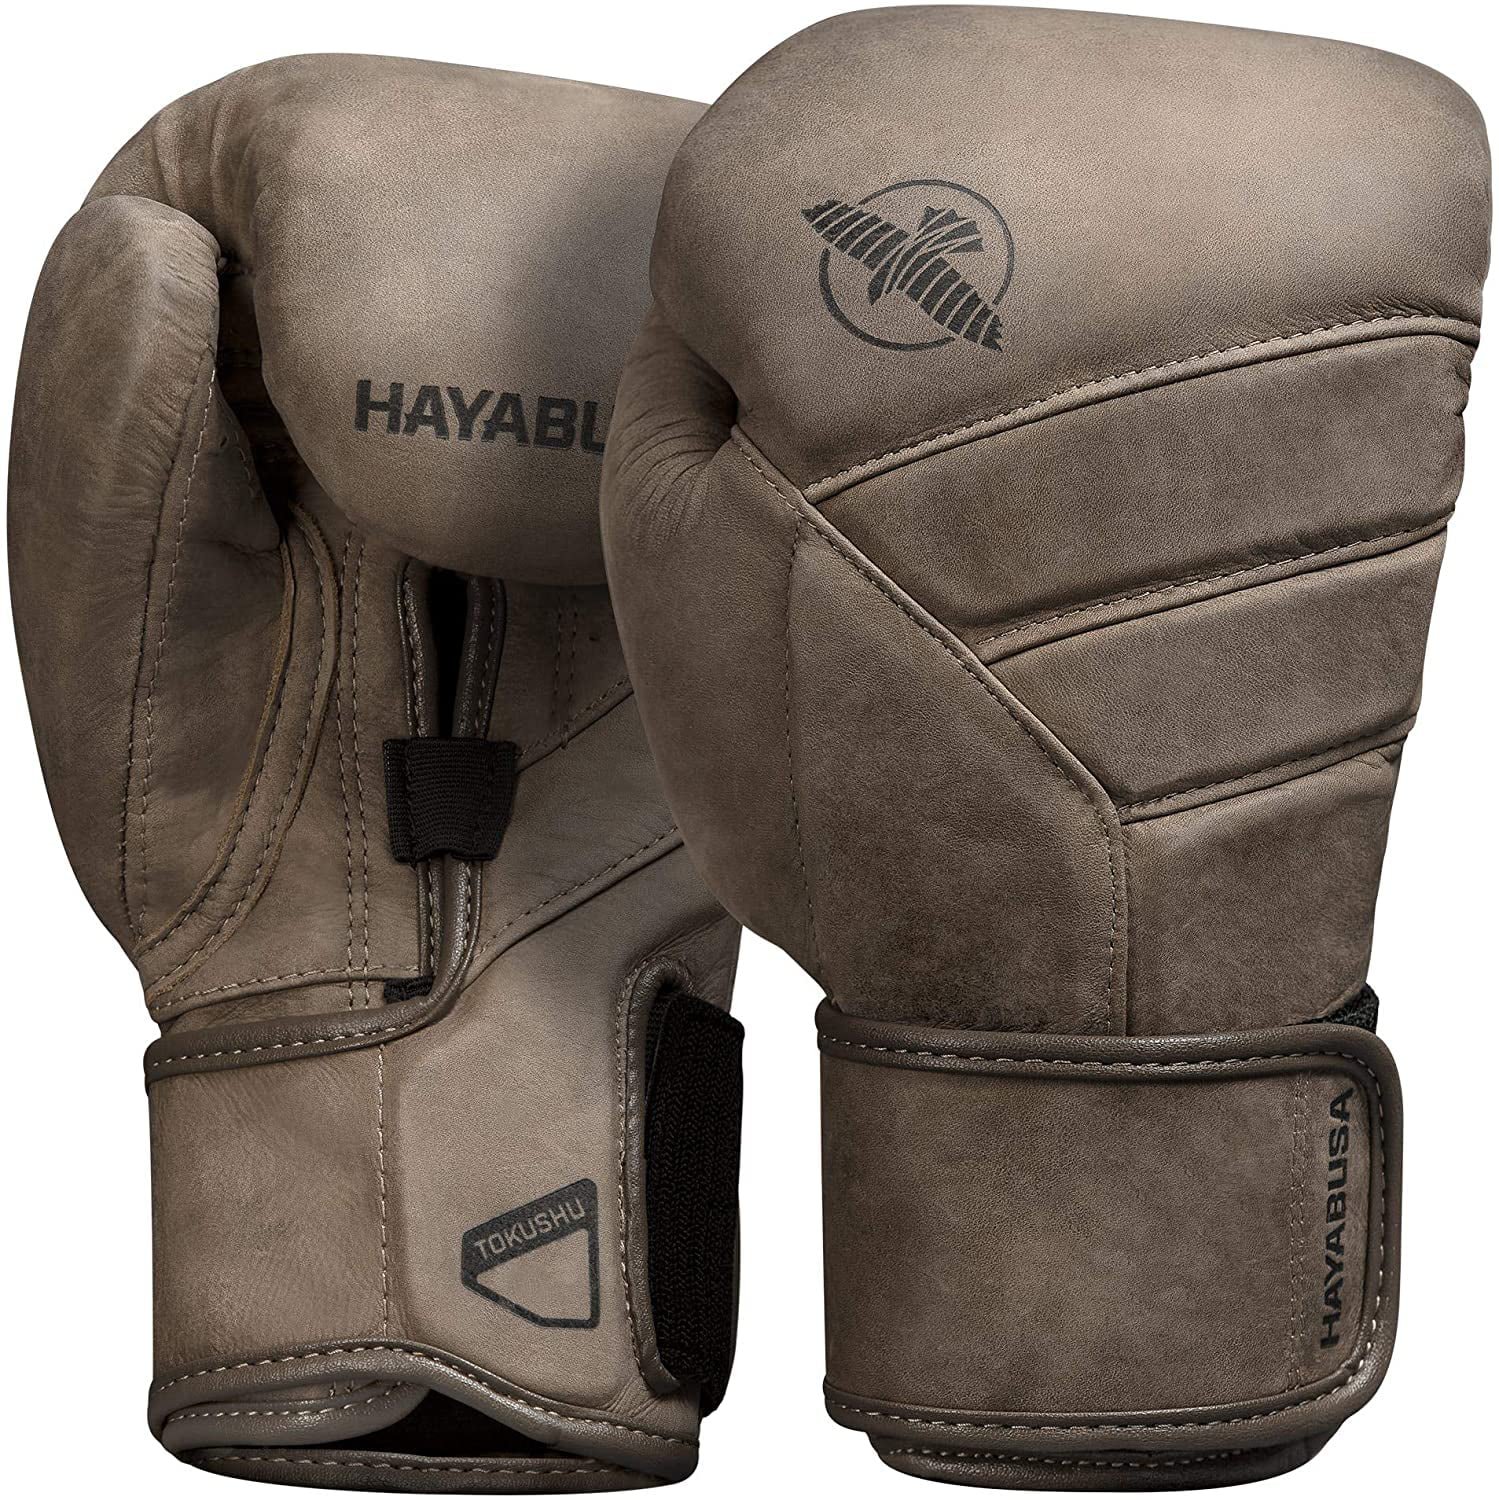 Hayabusa T3 Lx Italian Leather Boxing Gloves For Men And Women Brown 14 Oz Walmart Com Walmart Com